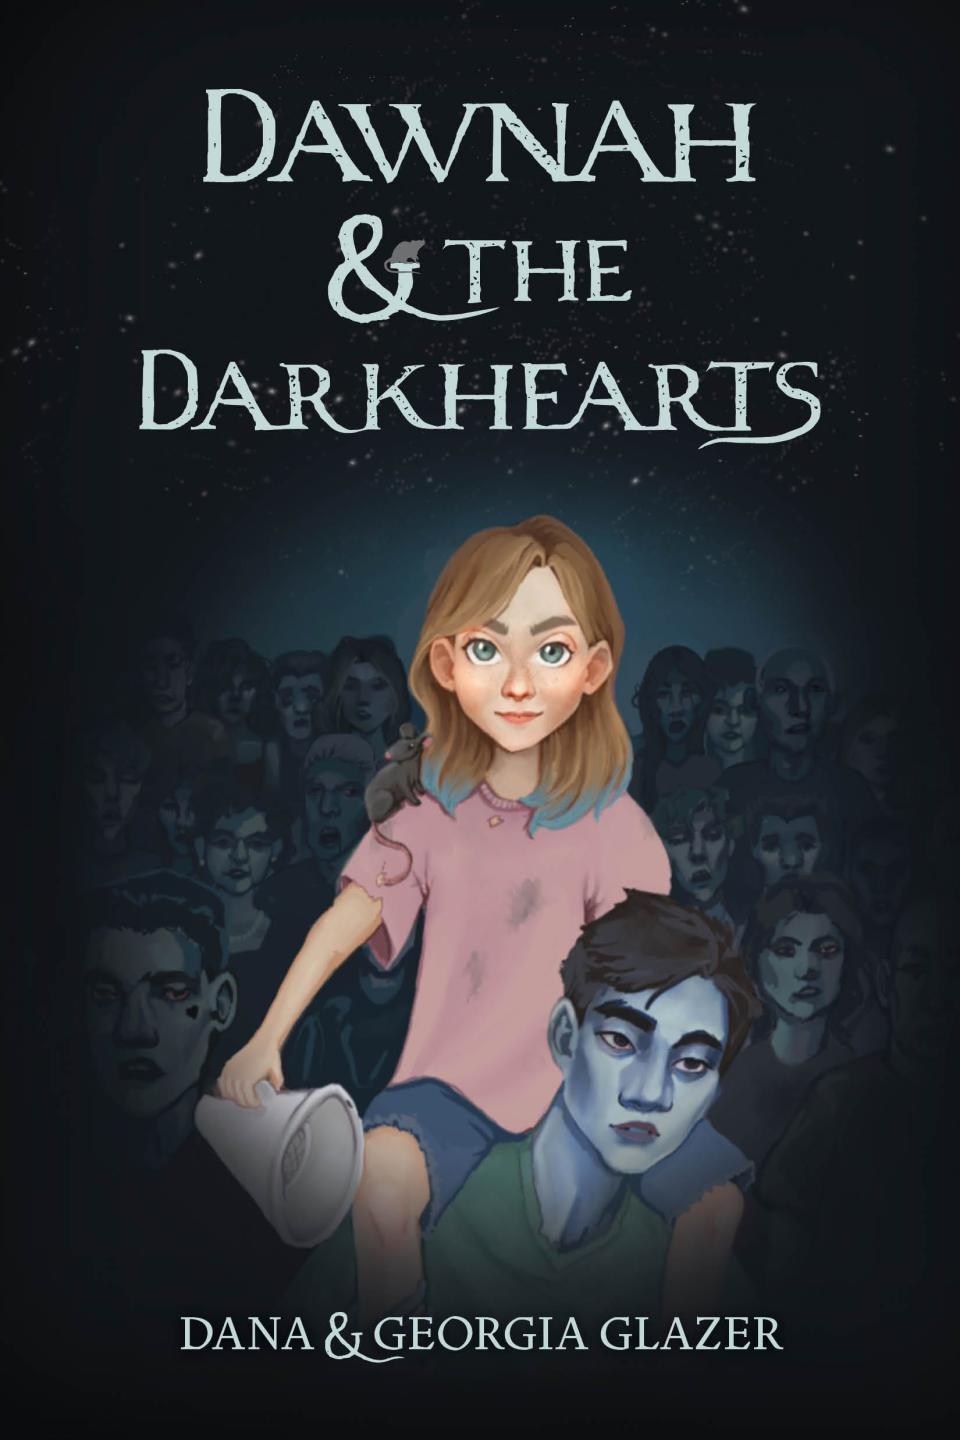 "Dawnah & the Darkhearts" by Ridgewood authors Dana and Georgia Glazer was released in September.